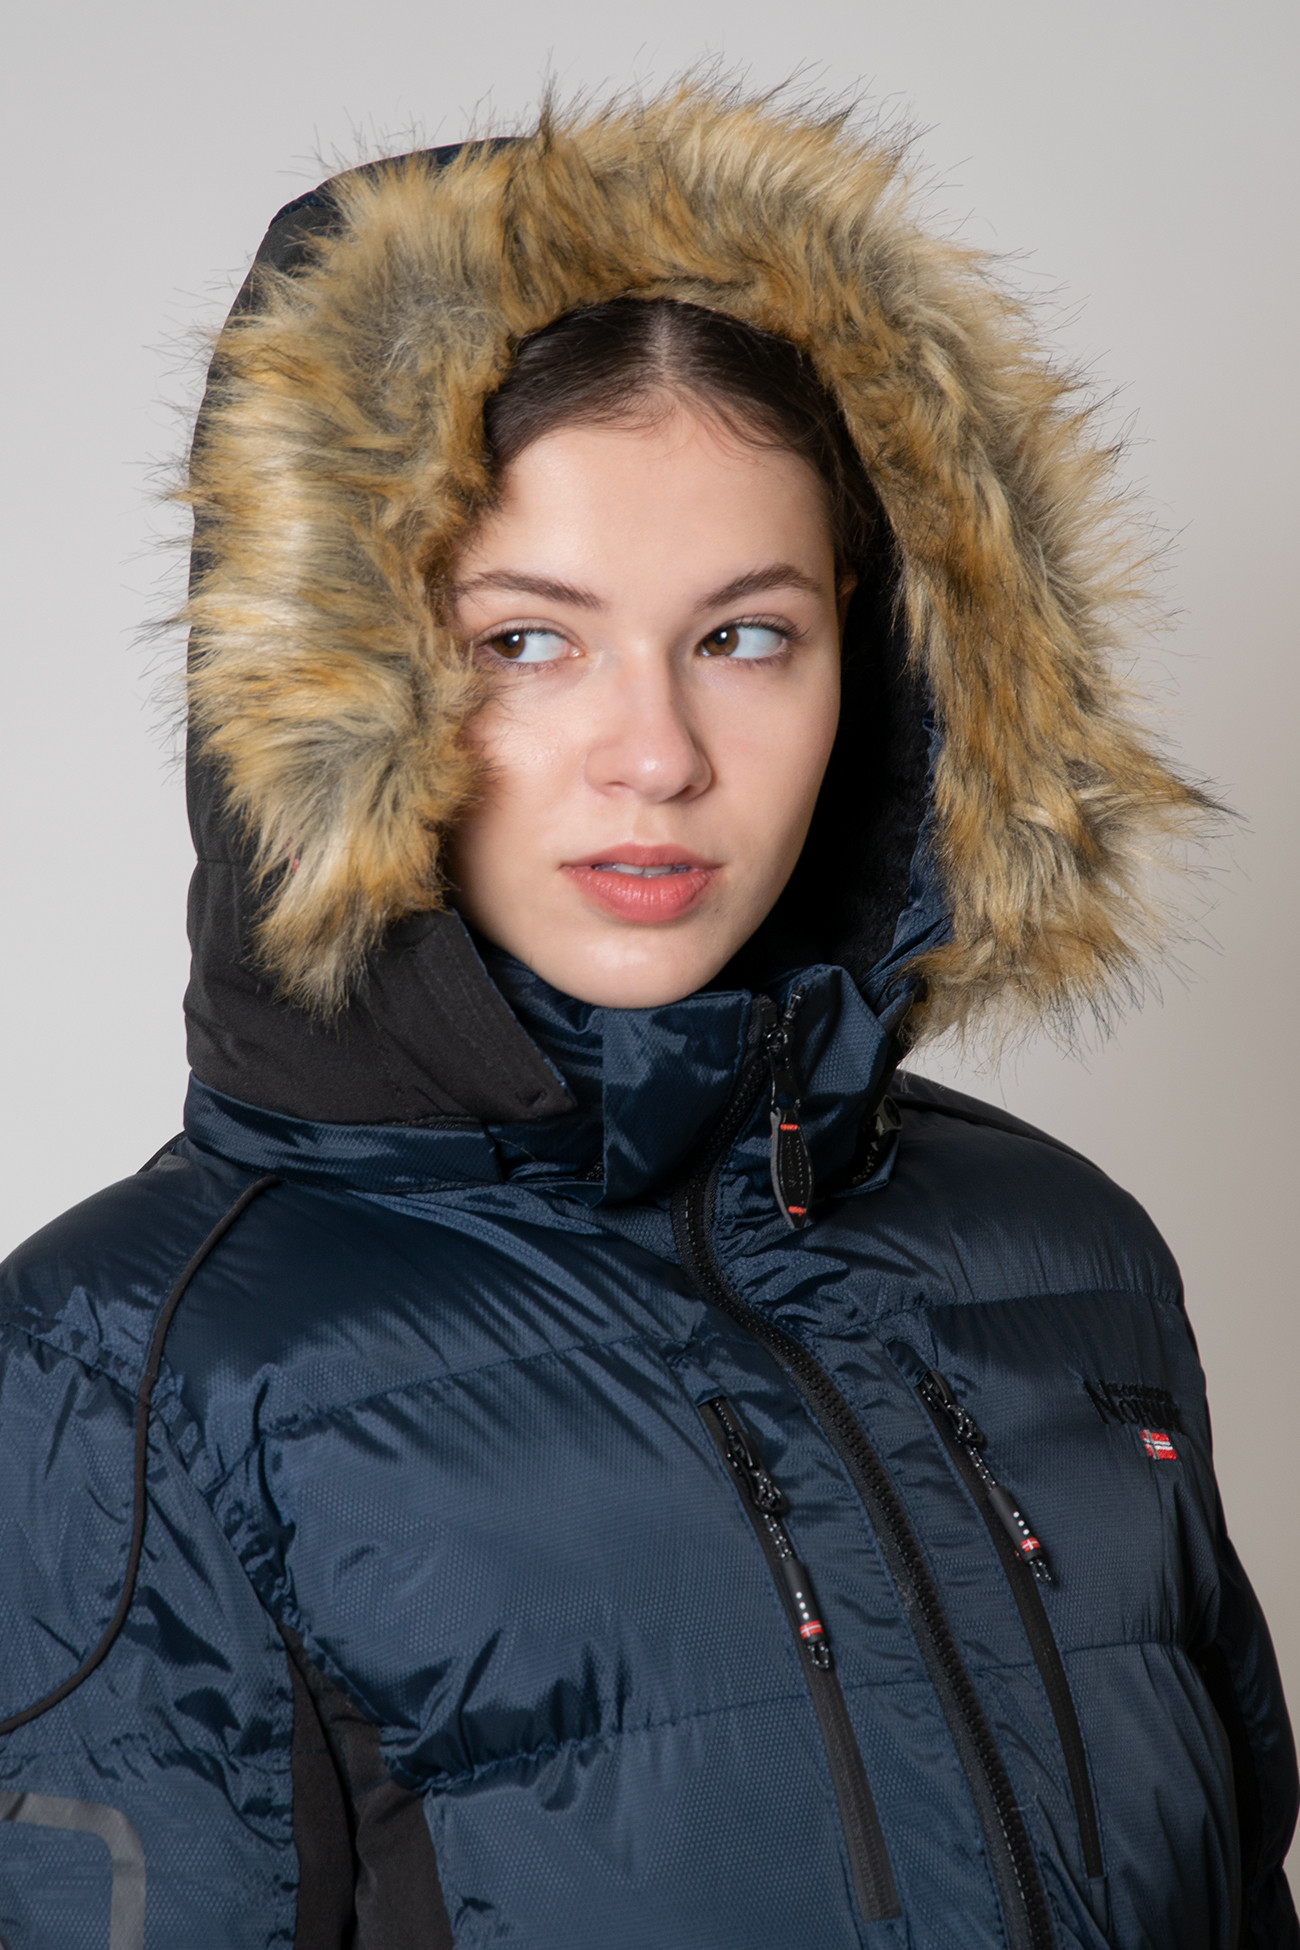 Куртка женская Geographical Norway синяя WQ622F-450